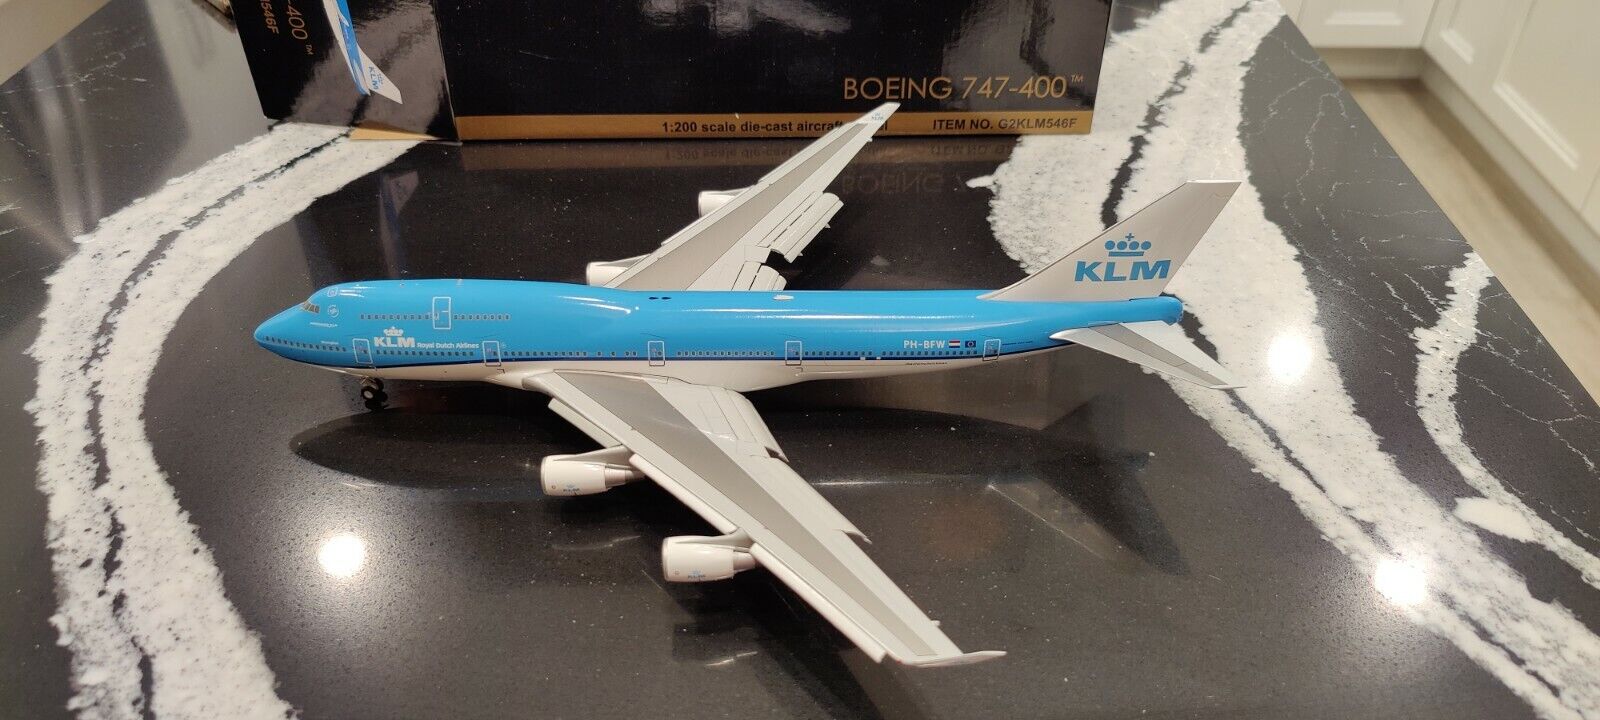 Gemini Jets KLM Royal Dutch Airlines B 747-406 1:200 G2KLM546F FLAPS DOWN PH-BFW